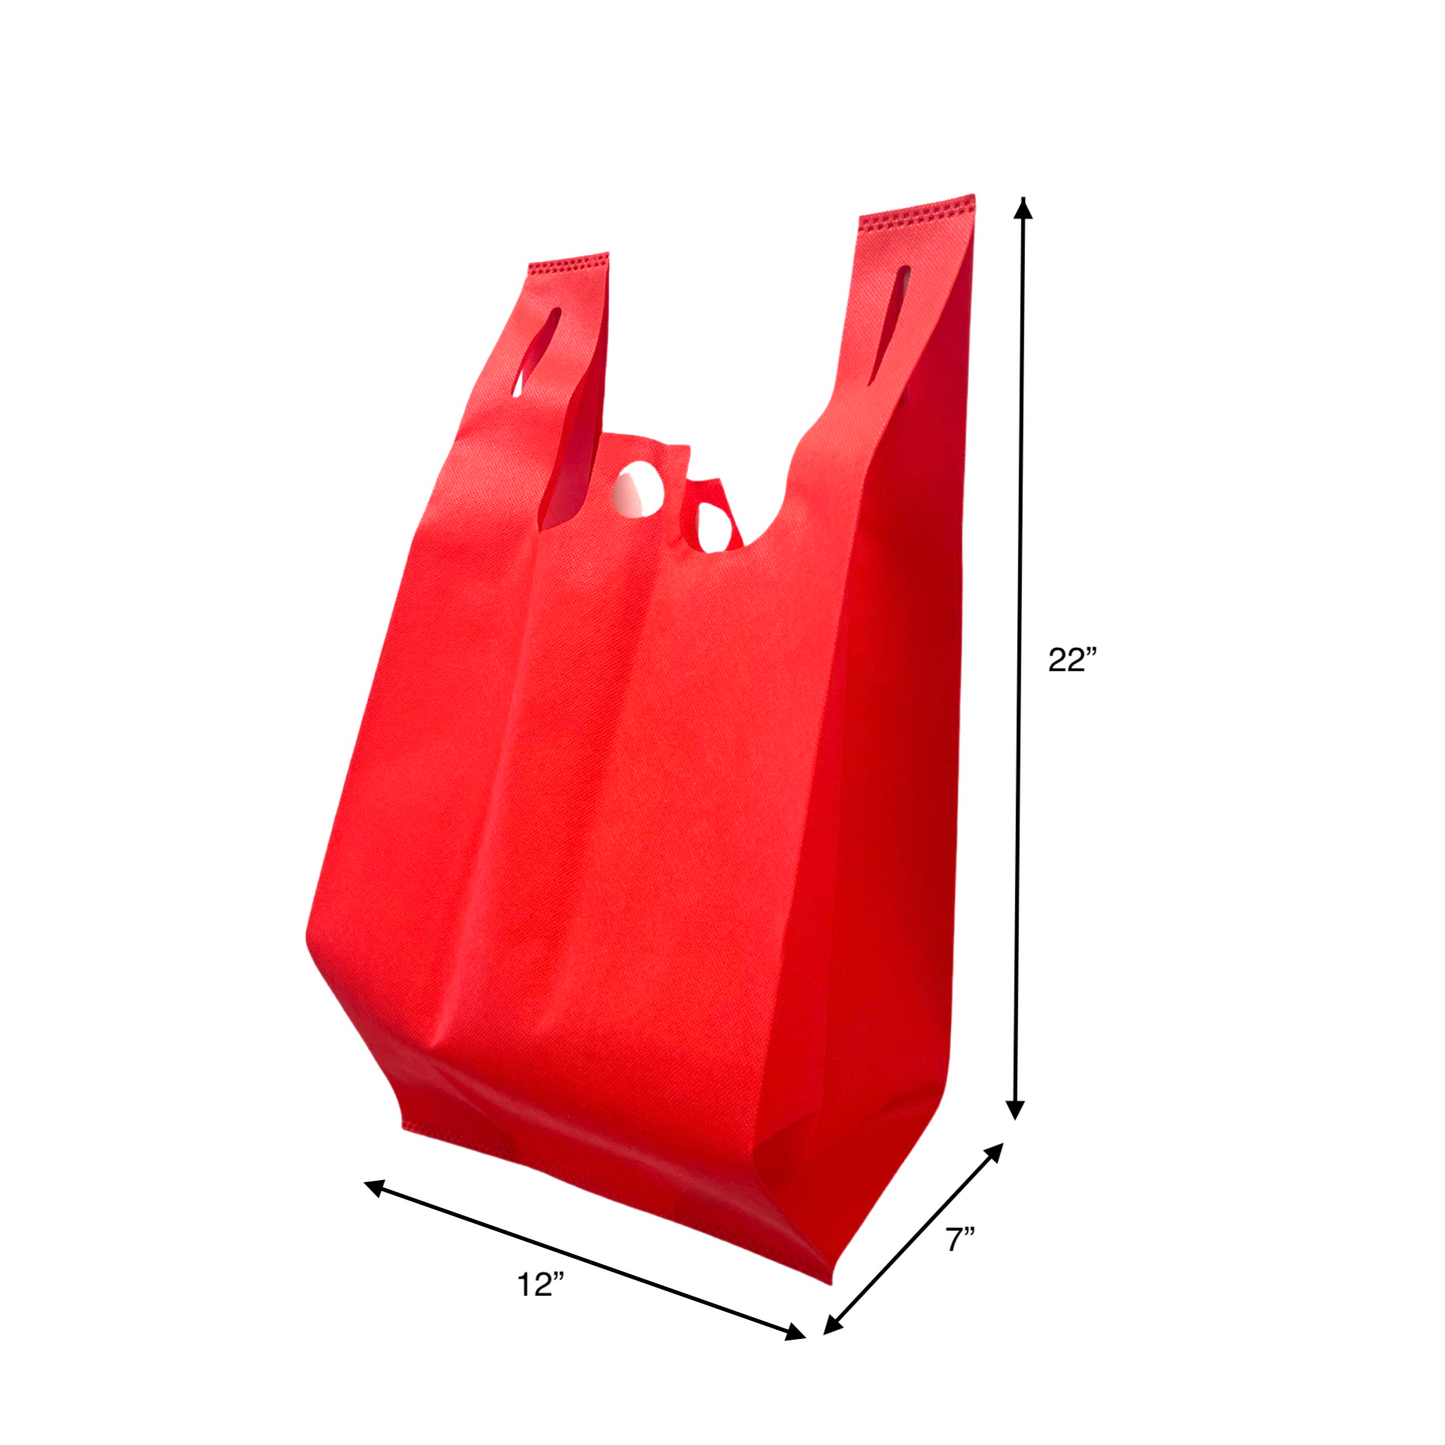 200pcs Non-Woven Reusable T-Shirt Bag 12x7x22 inches Red Shopping Bags Pinch Bottom; $0.42/bag